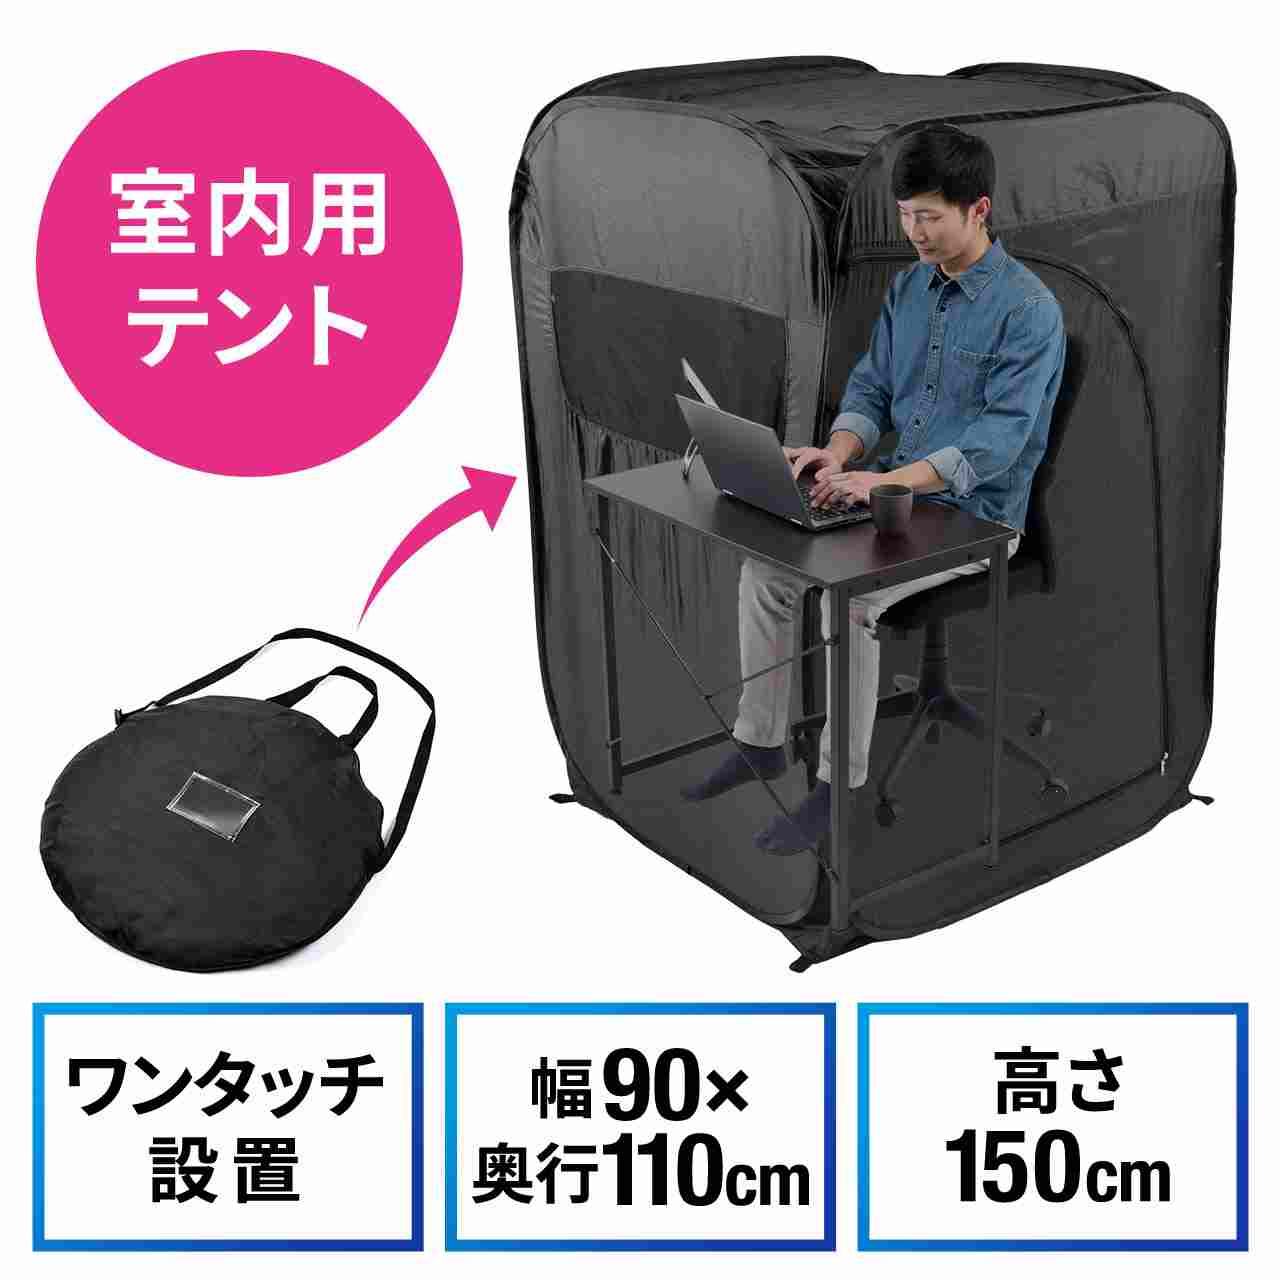 La tenda per smart working giapponese